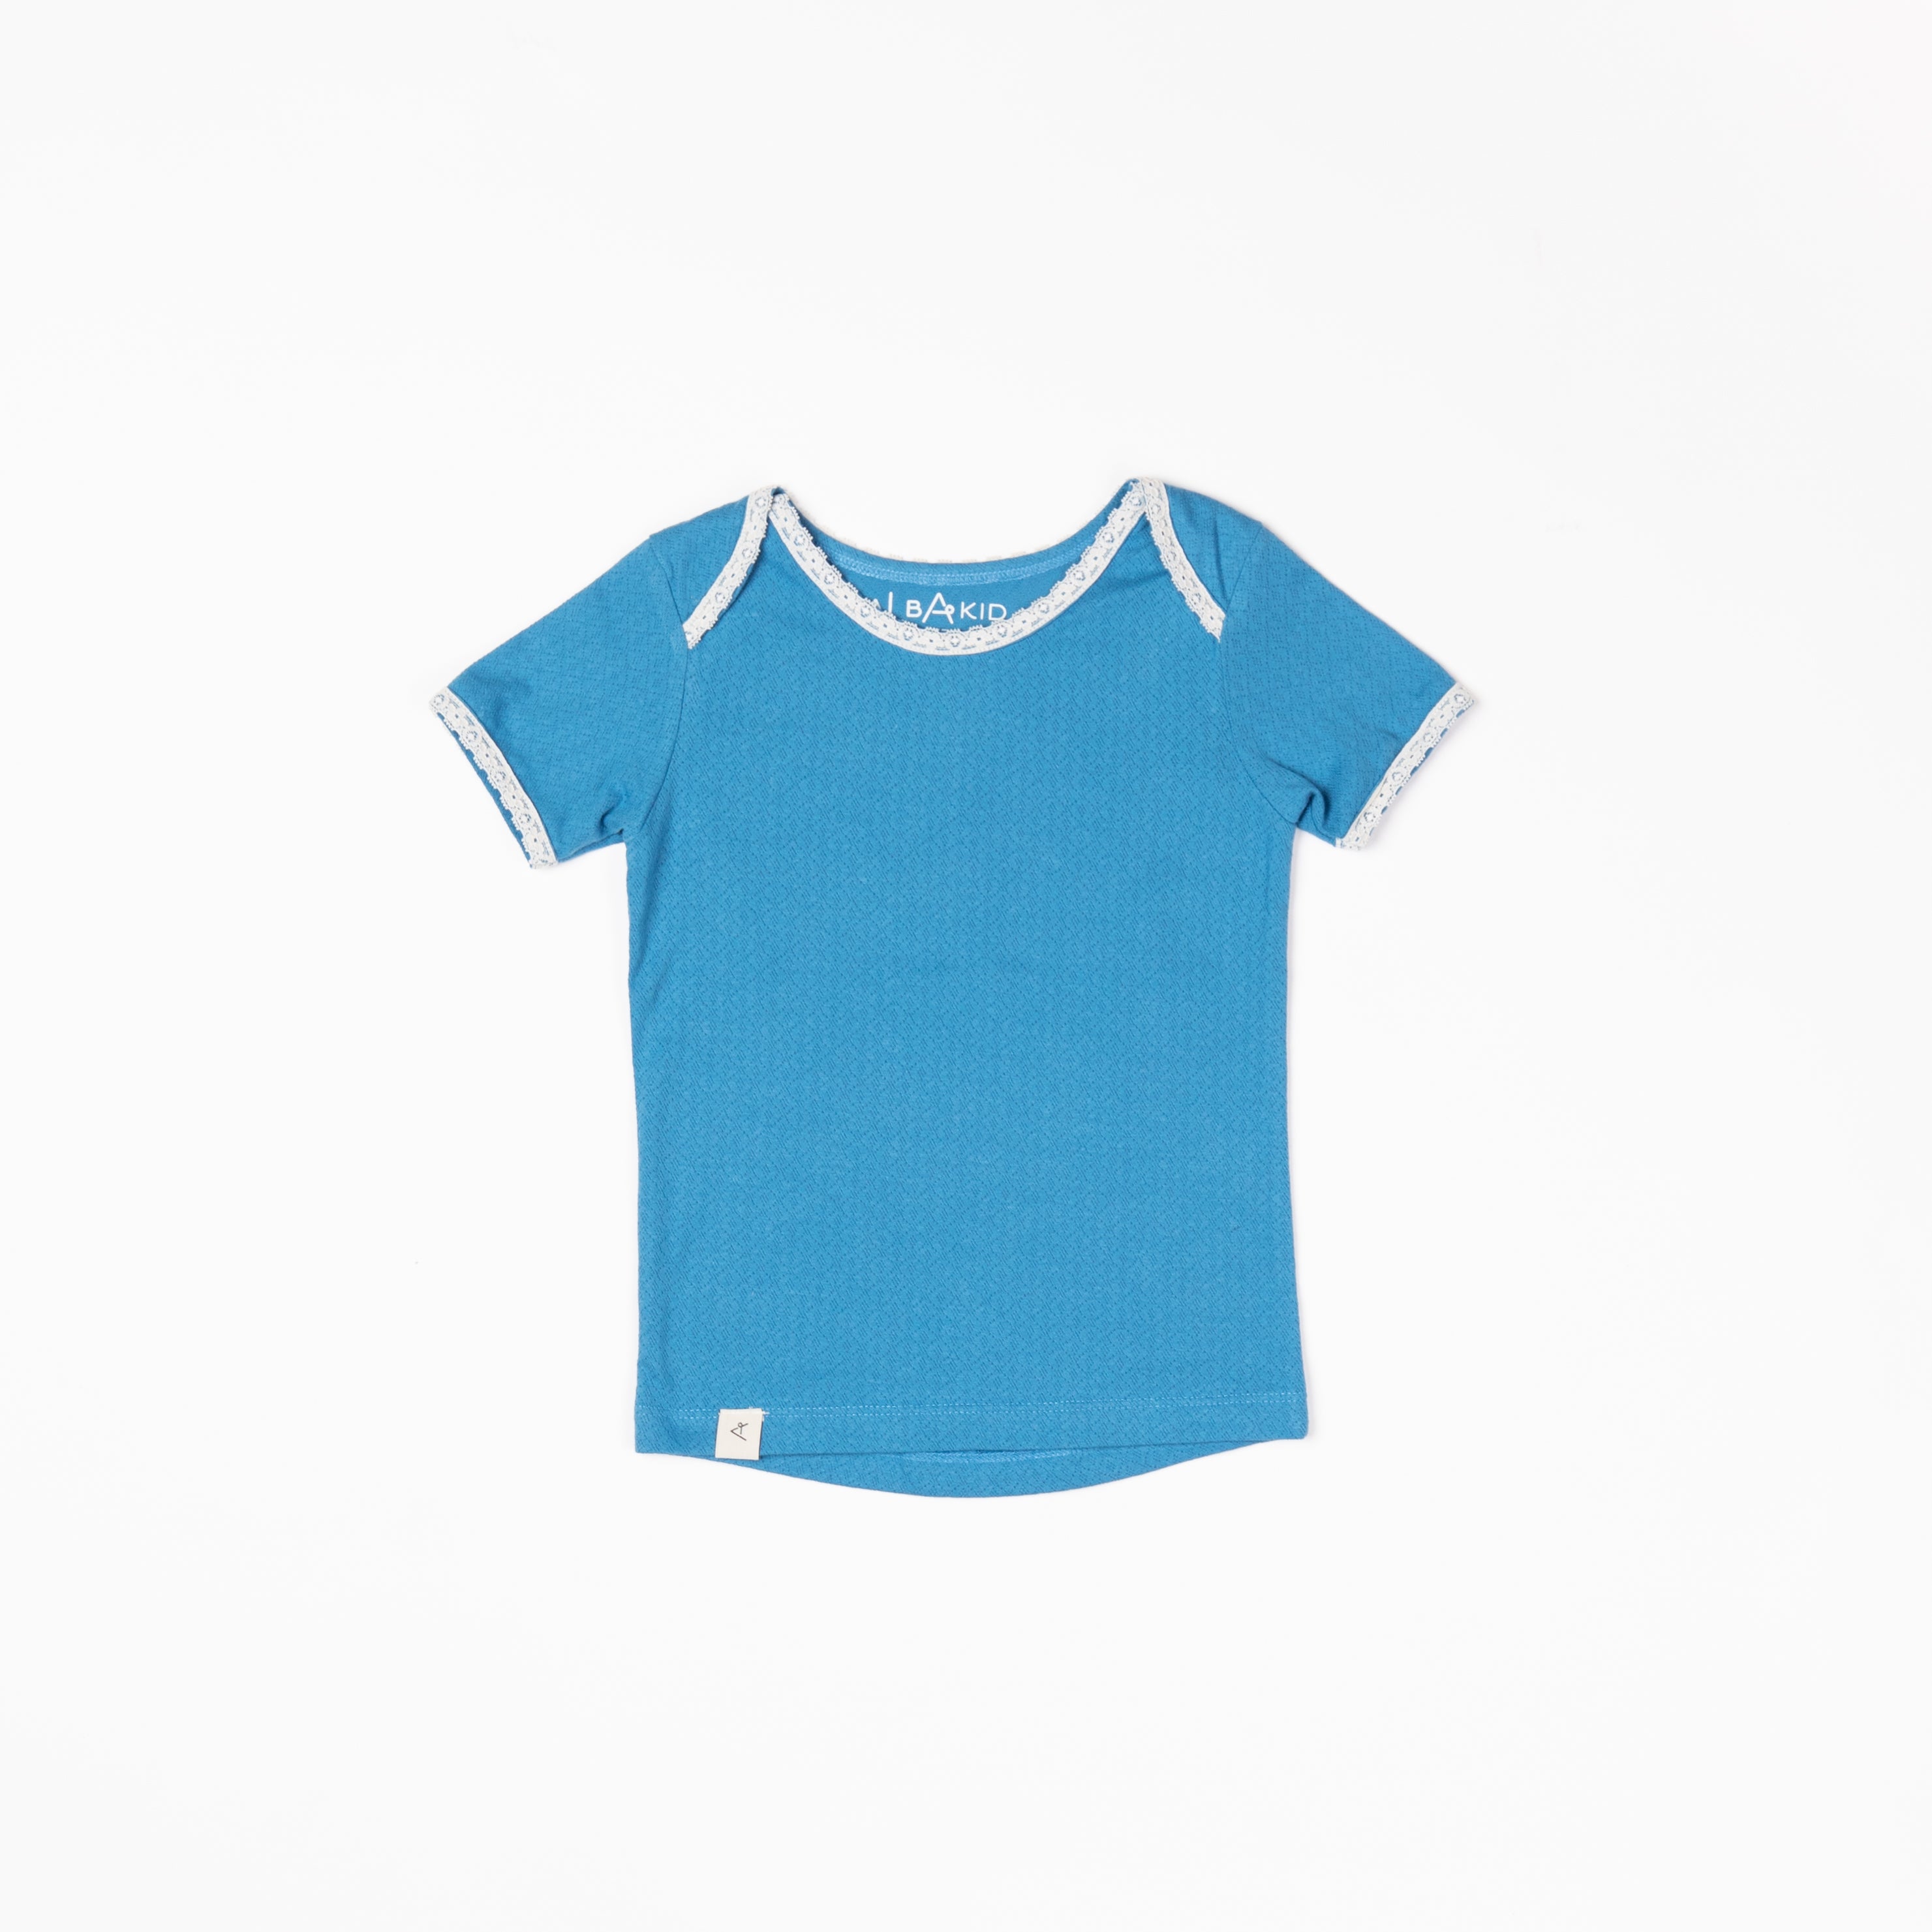 PRICE DROP * Alba - Vera Tee Shirt - Vallarta Blue